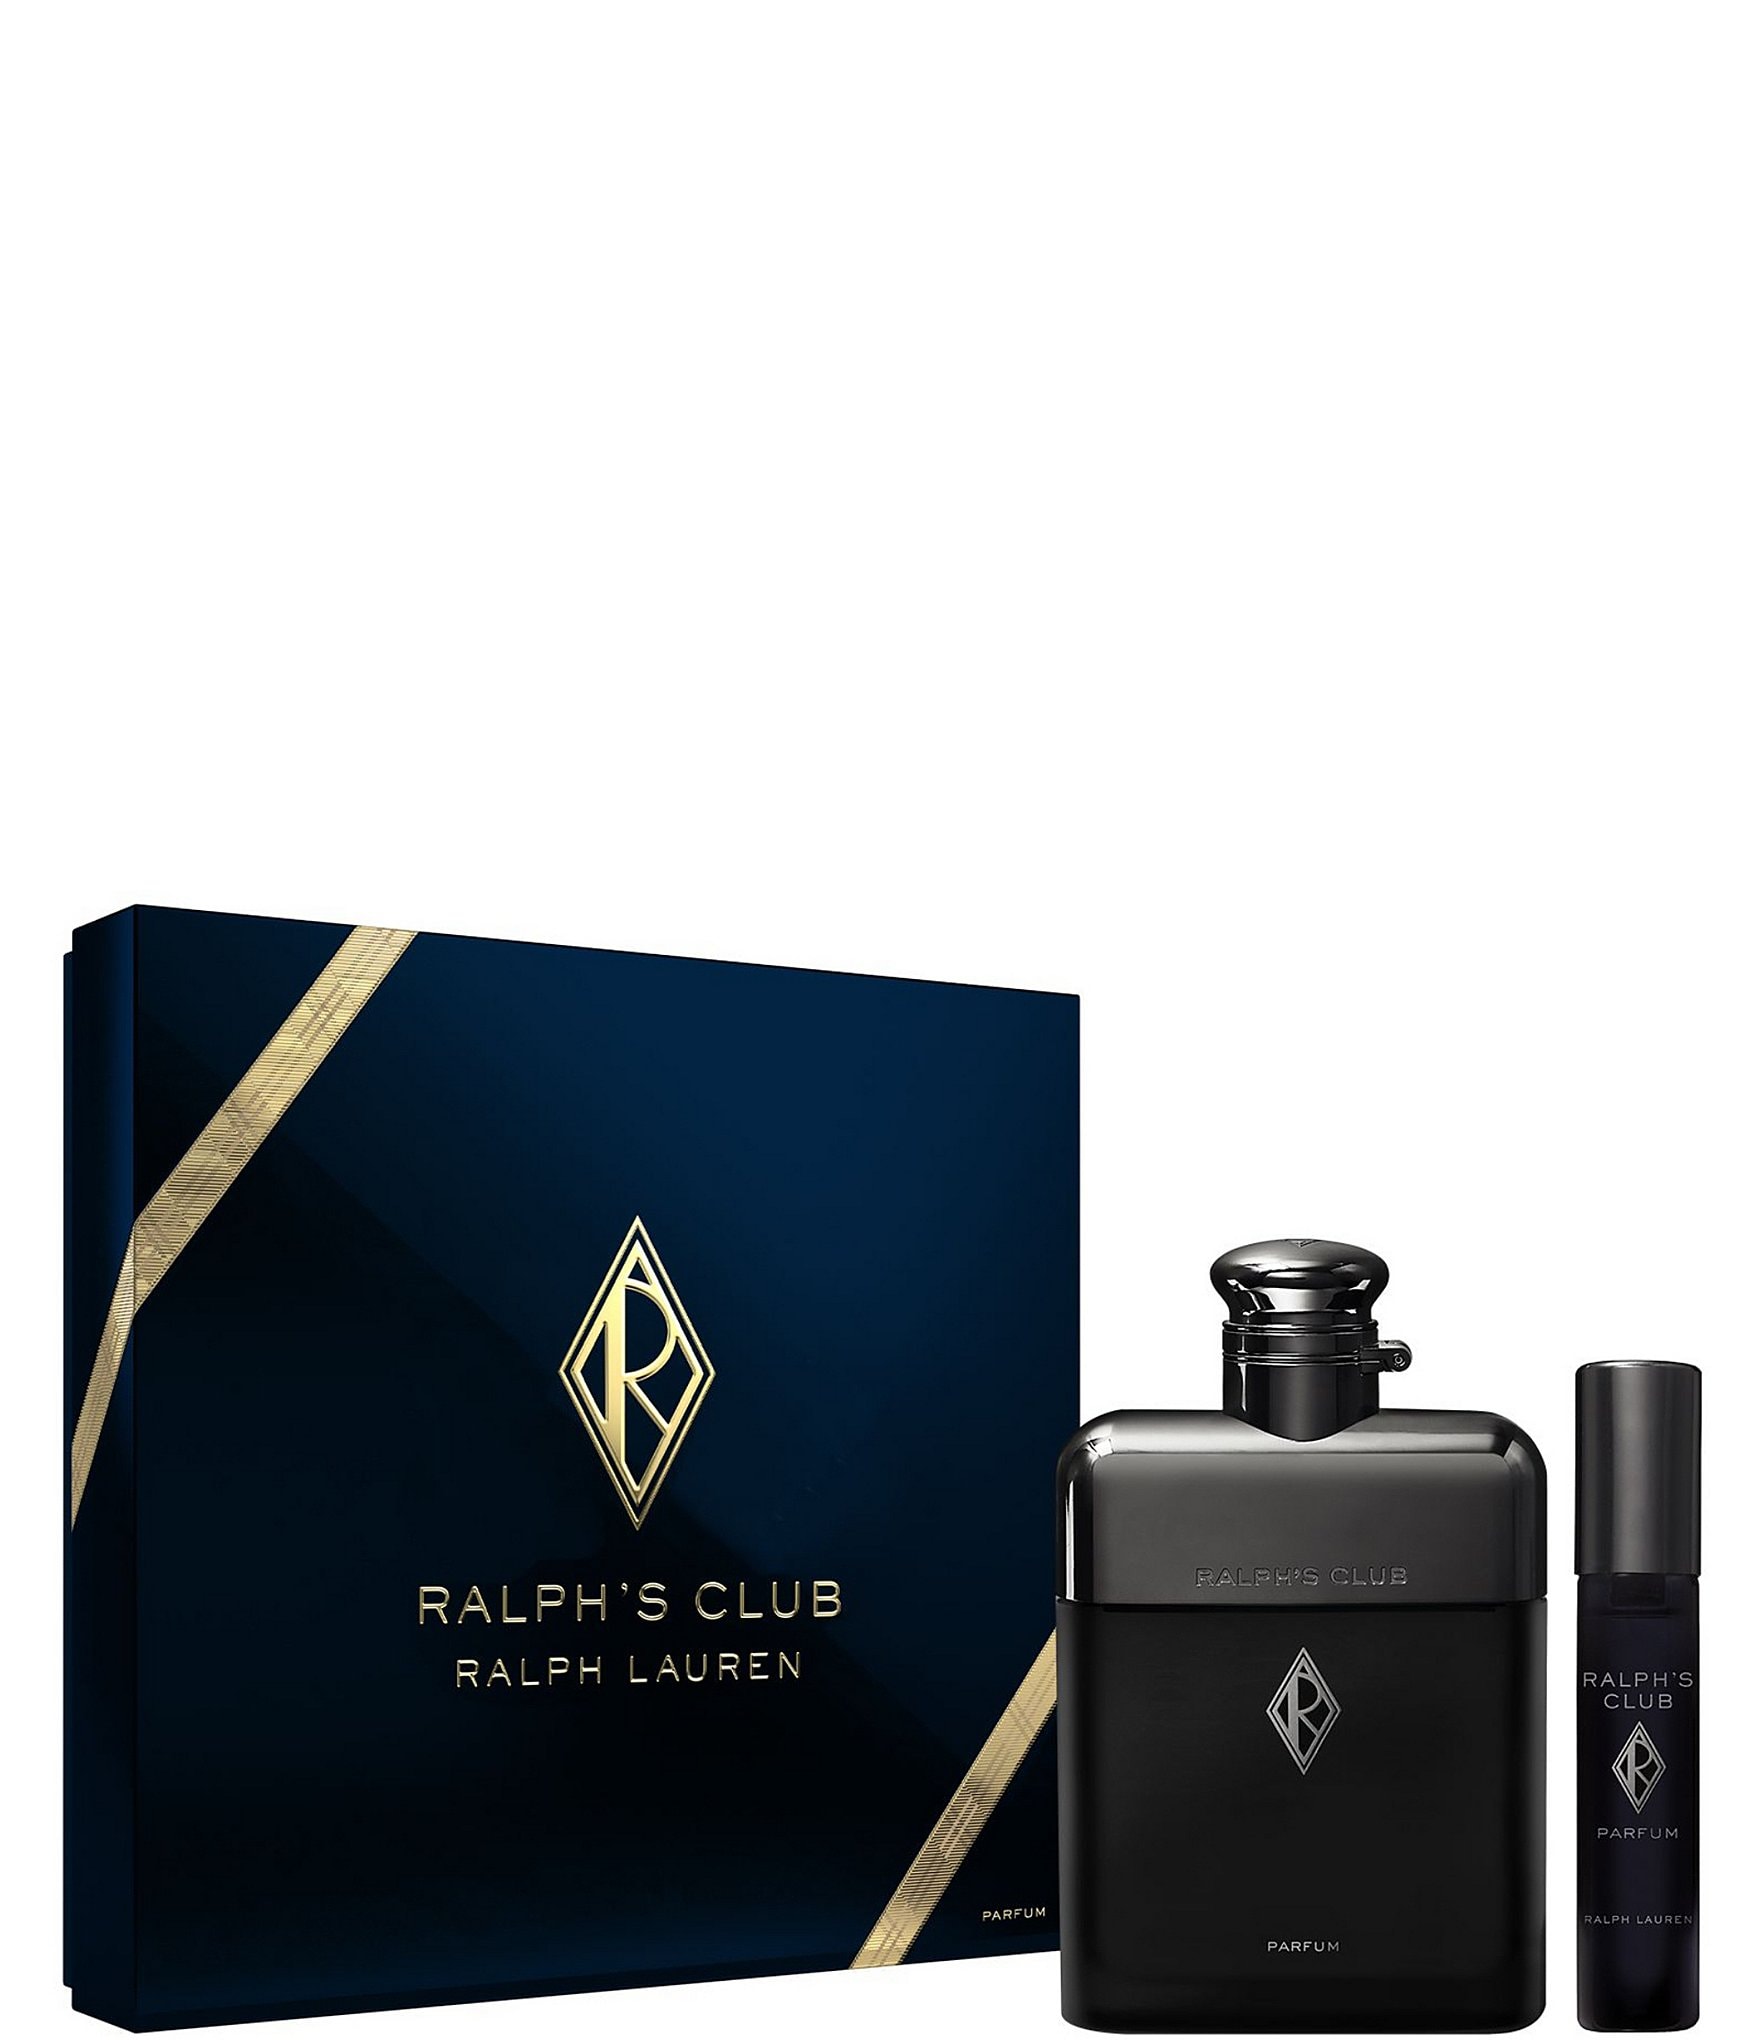 Ralph Lauren Ralph's Club Parfum 2-Piece Men's Fragrance Gift Set ...